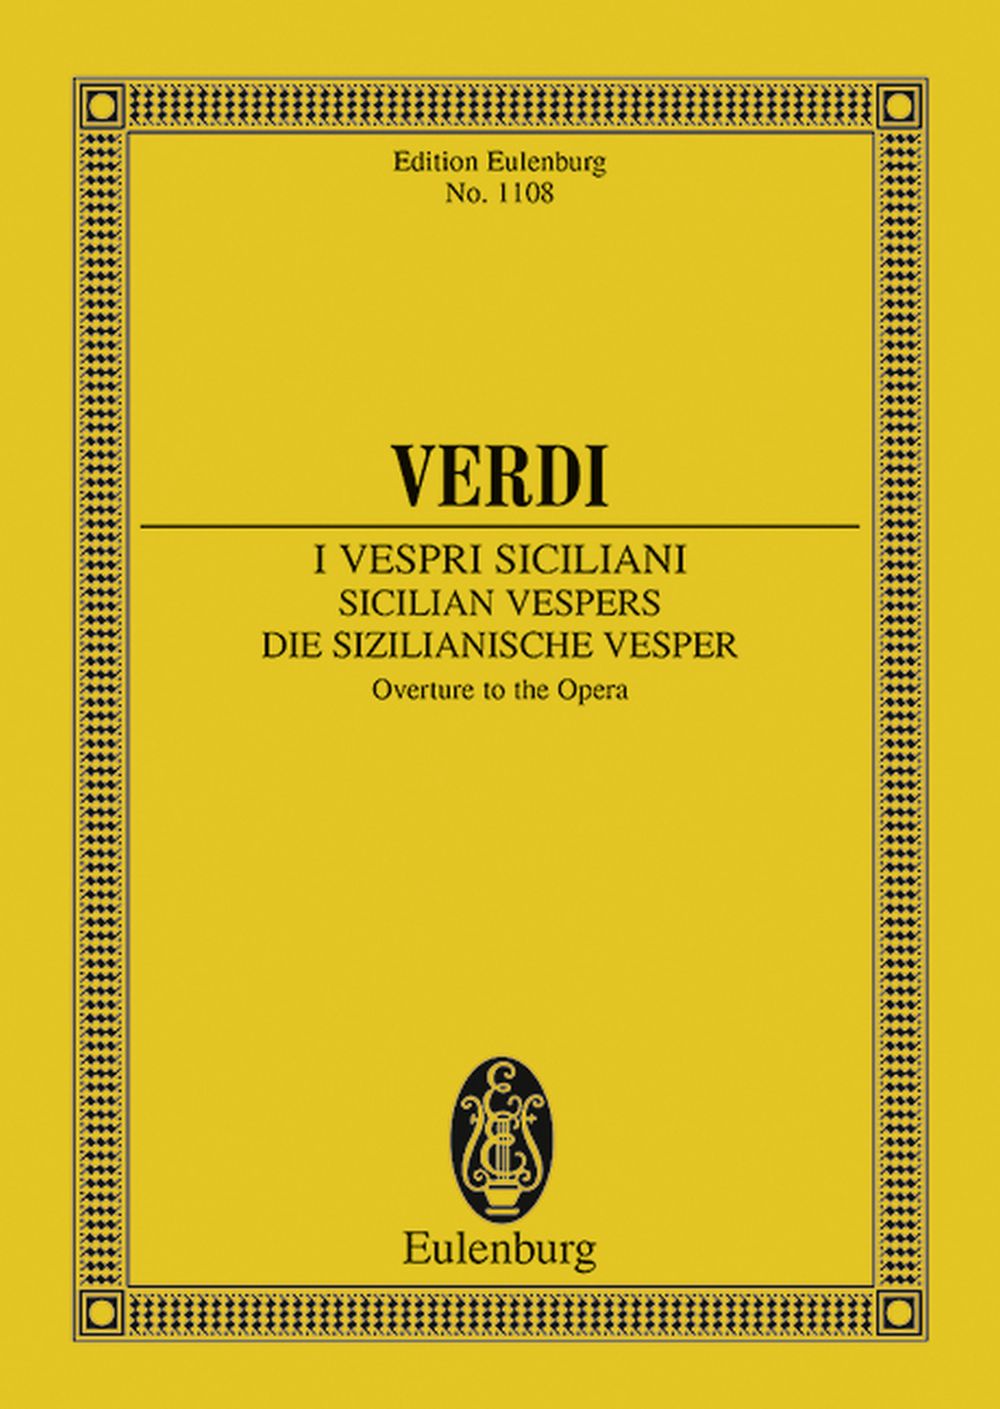 Giuseppe Verdi: Overture  Die Sizilianische Vesper: Orchestra: Miniature Score